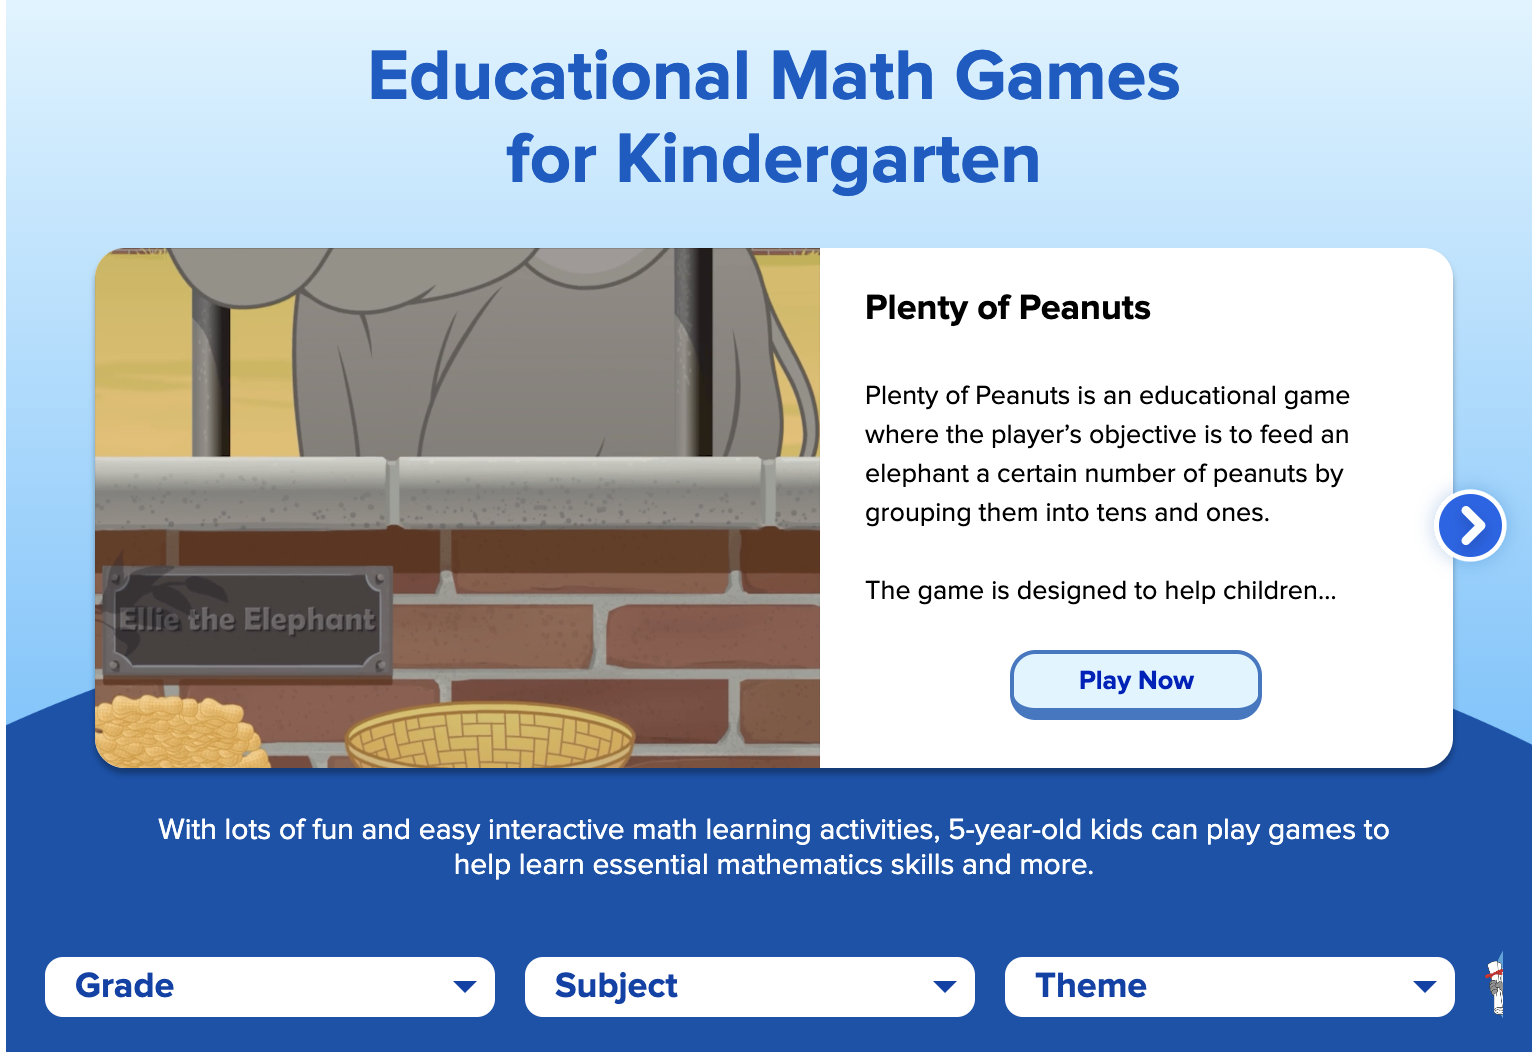 Educational math games for Kindergarten. 